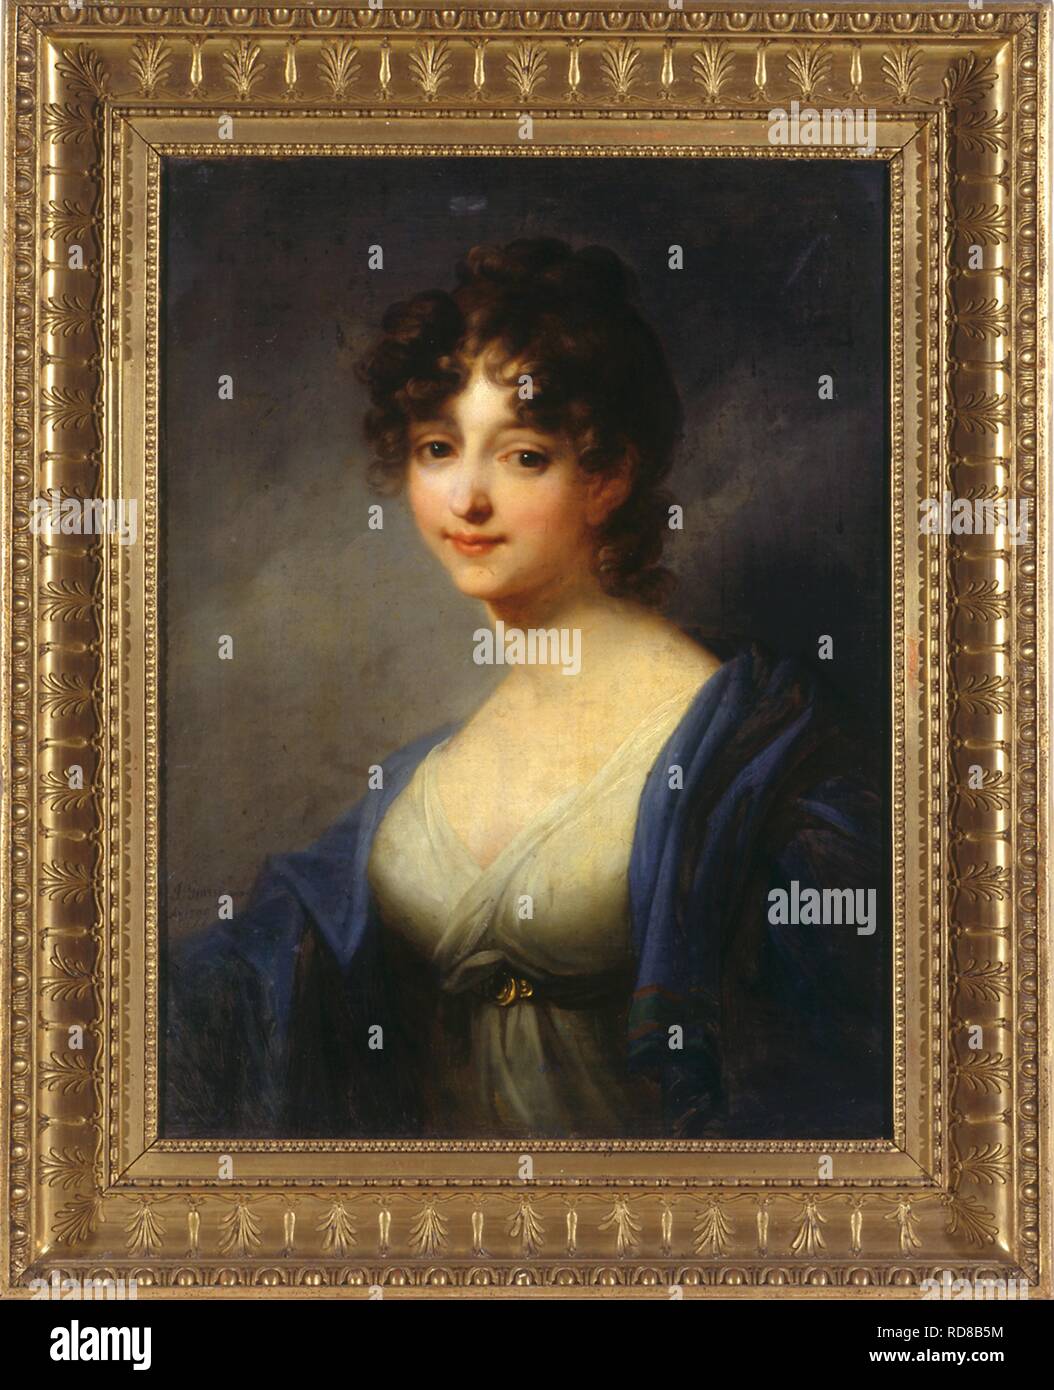 Princess Wilhelmine of Courland, Duchess of Sagan (1781-1839). Museum: Ateneum, Helsinki. Author: Grassi, Józef. Stock Photo